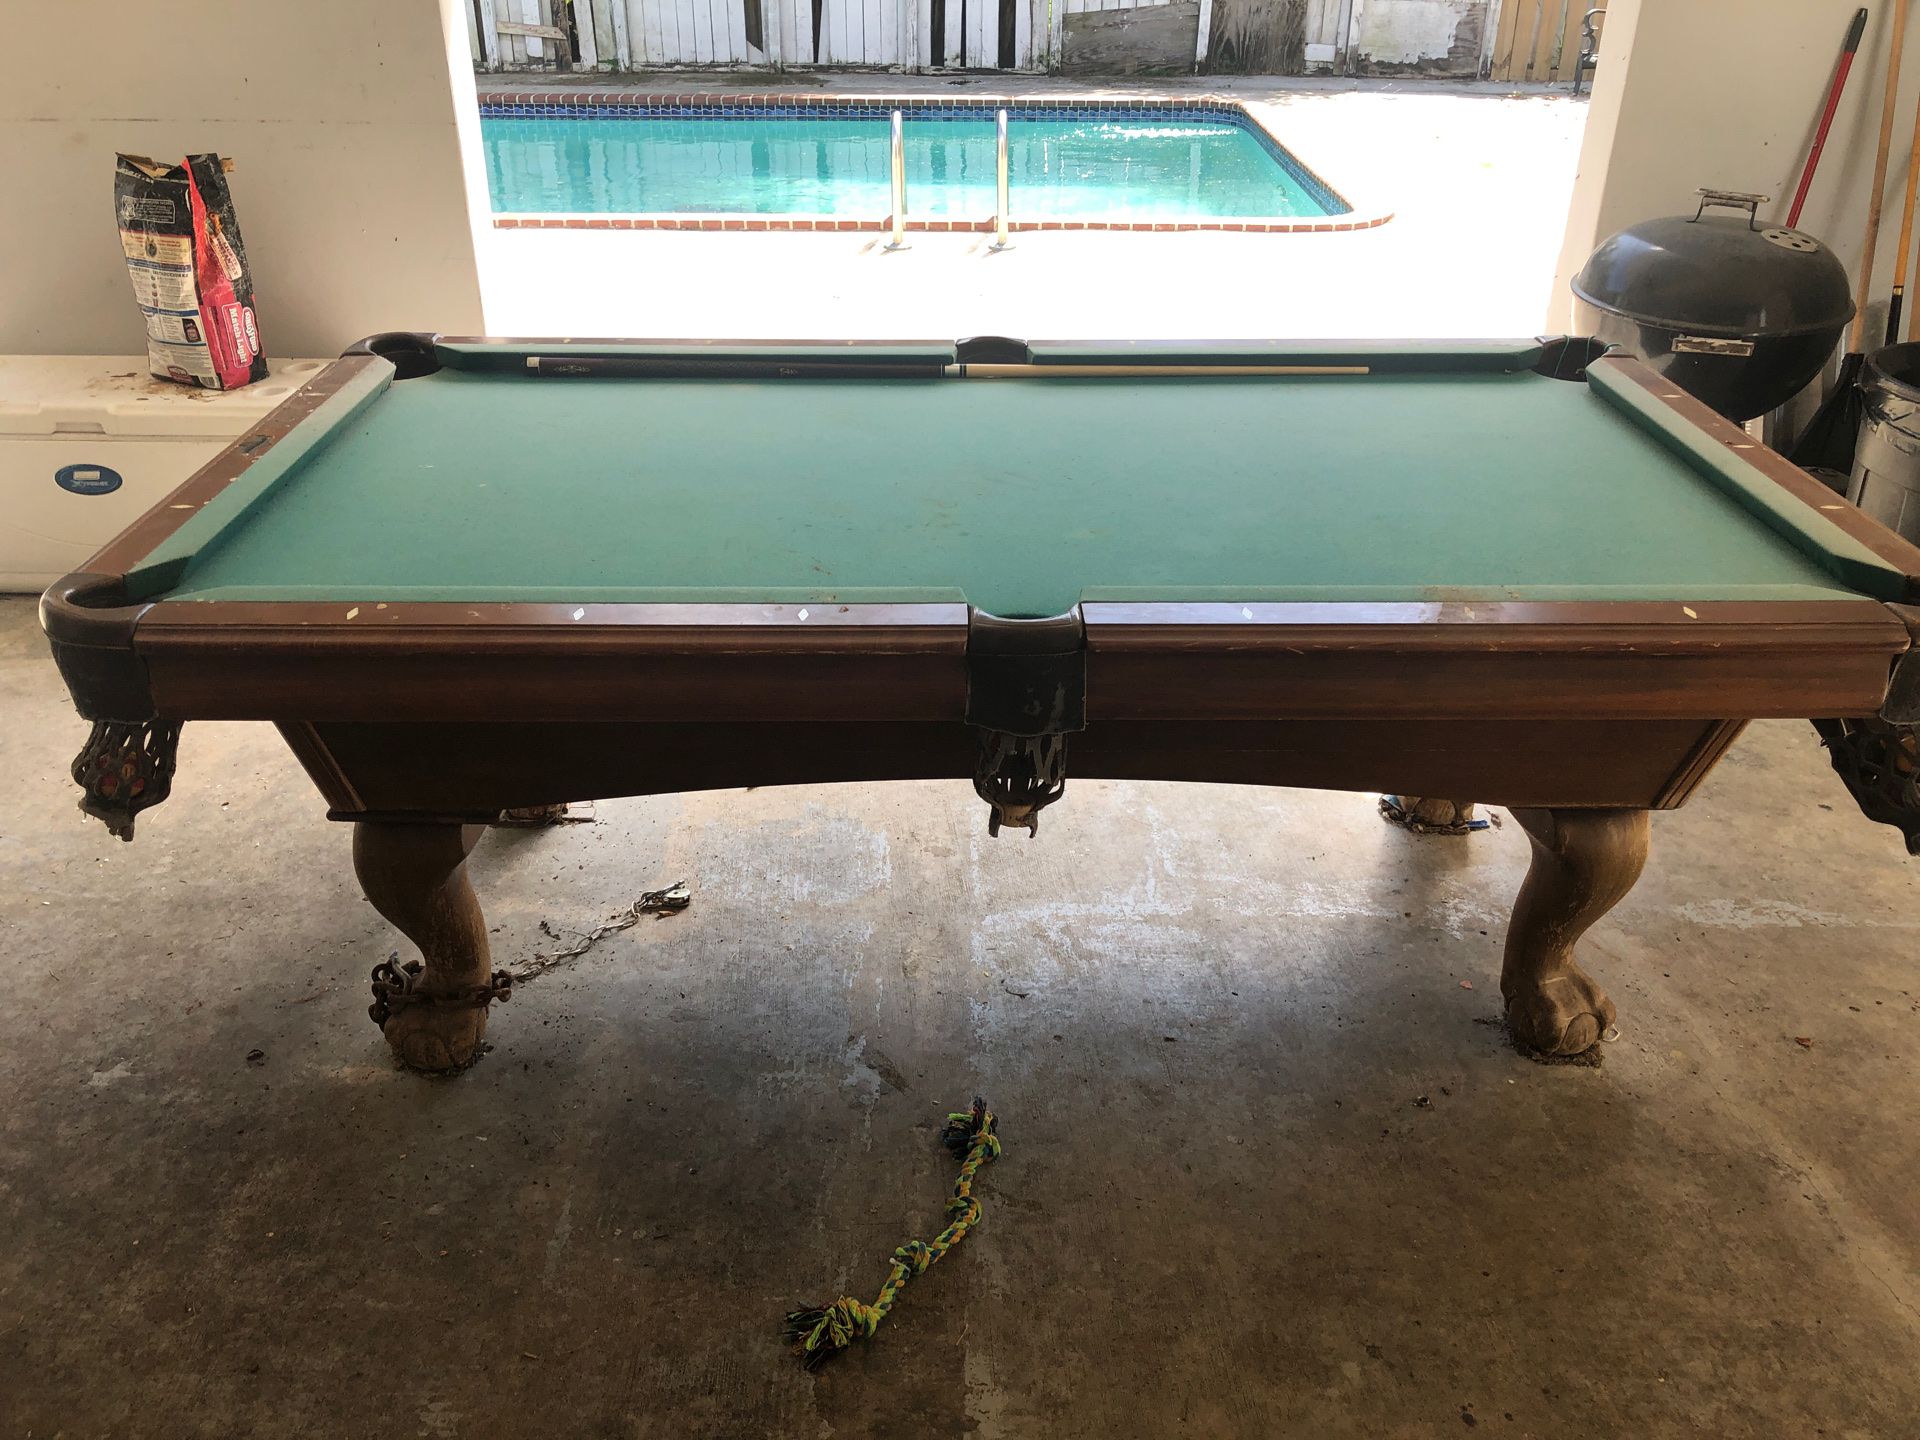 Free pool table.